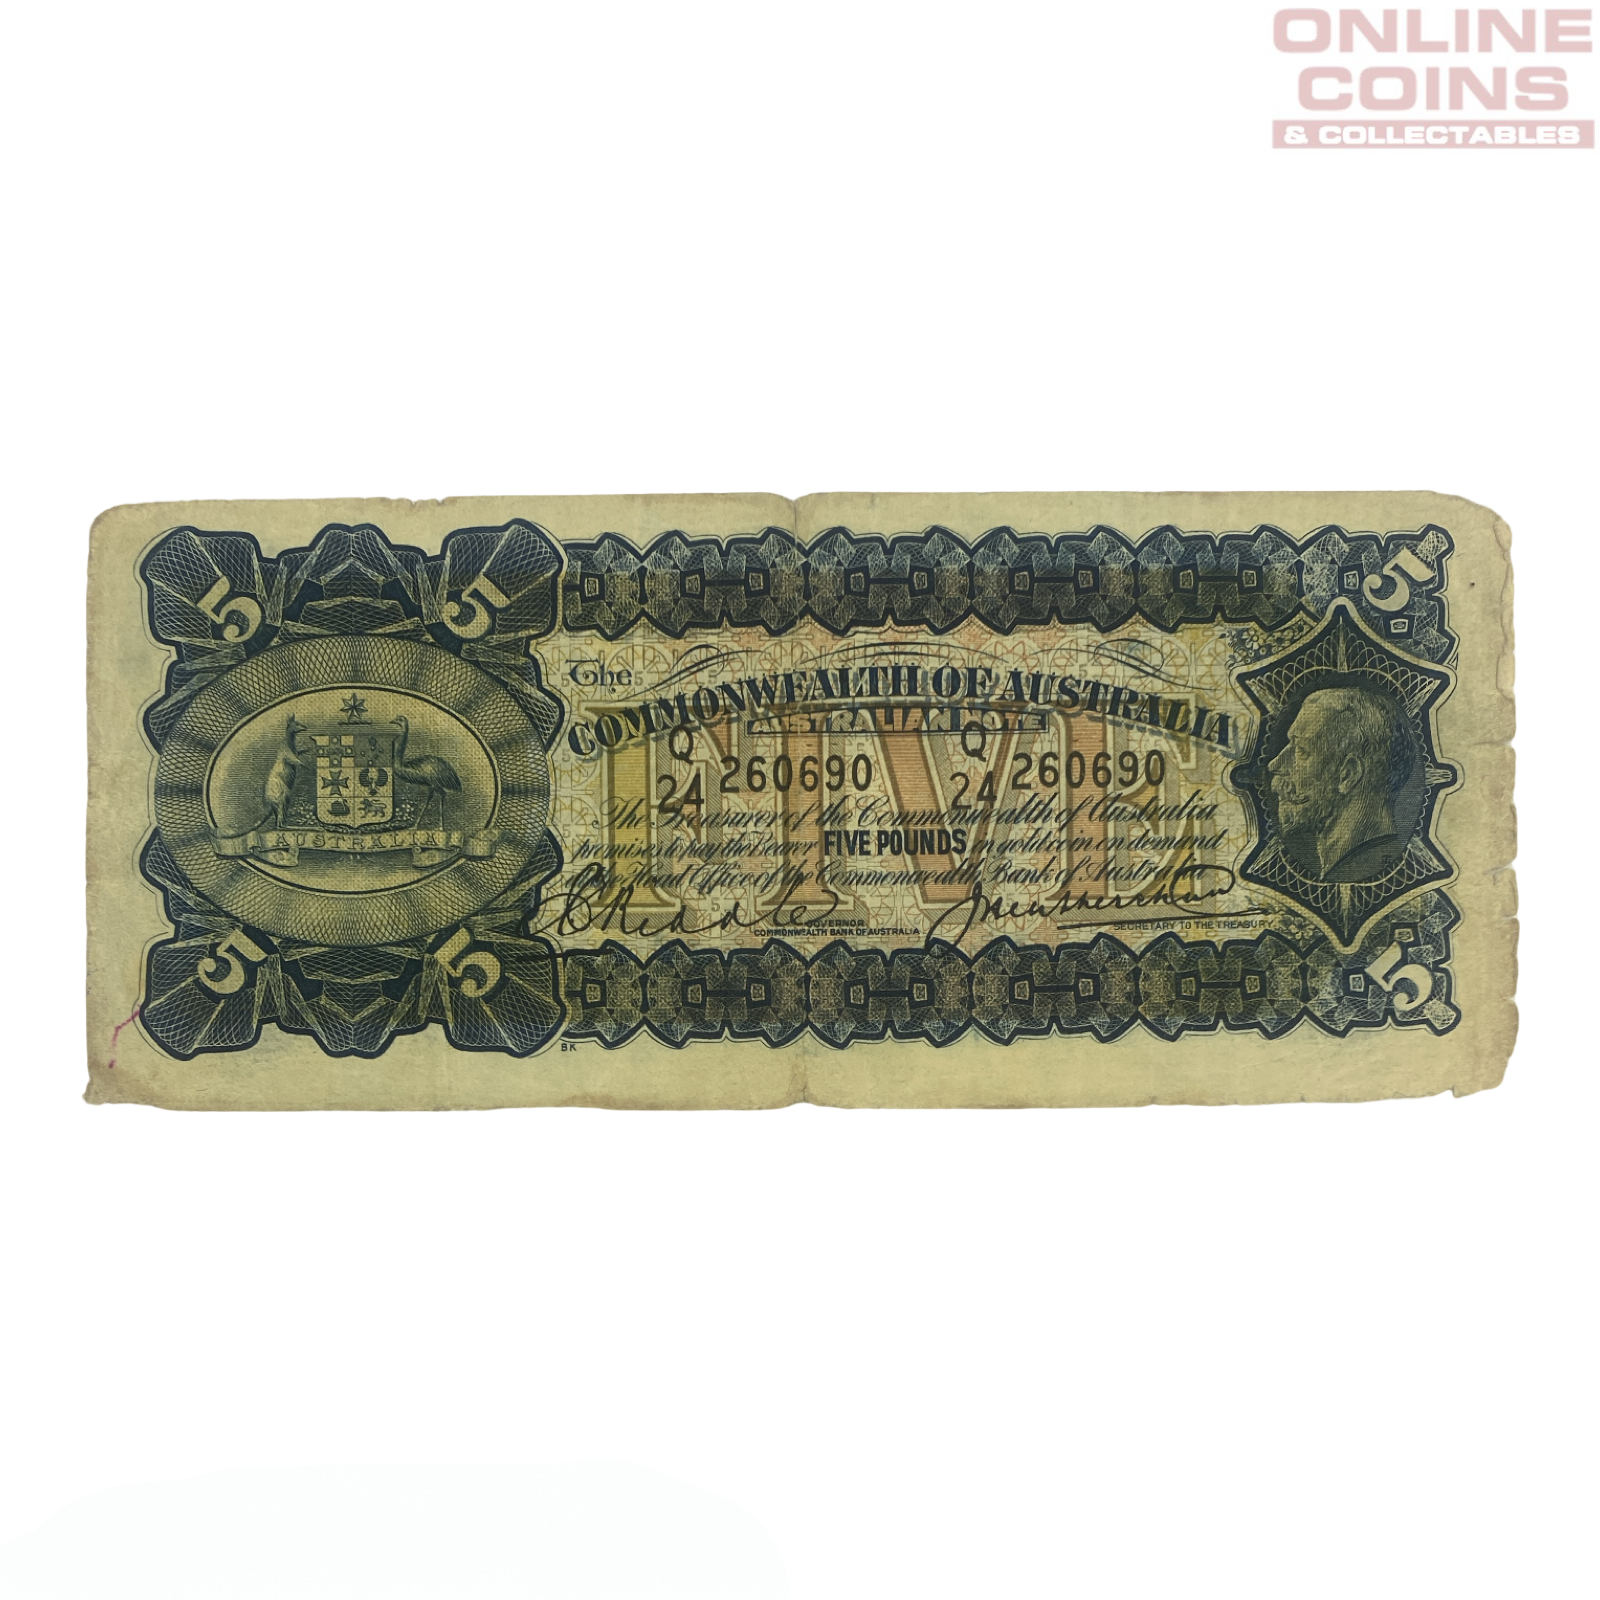 1927 Riddle Heathershaw Five Pound Note - Good Grade